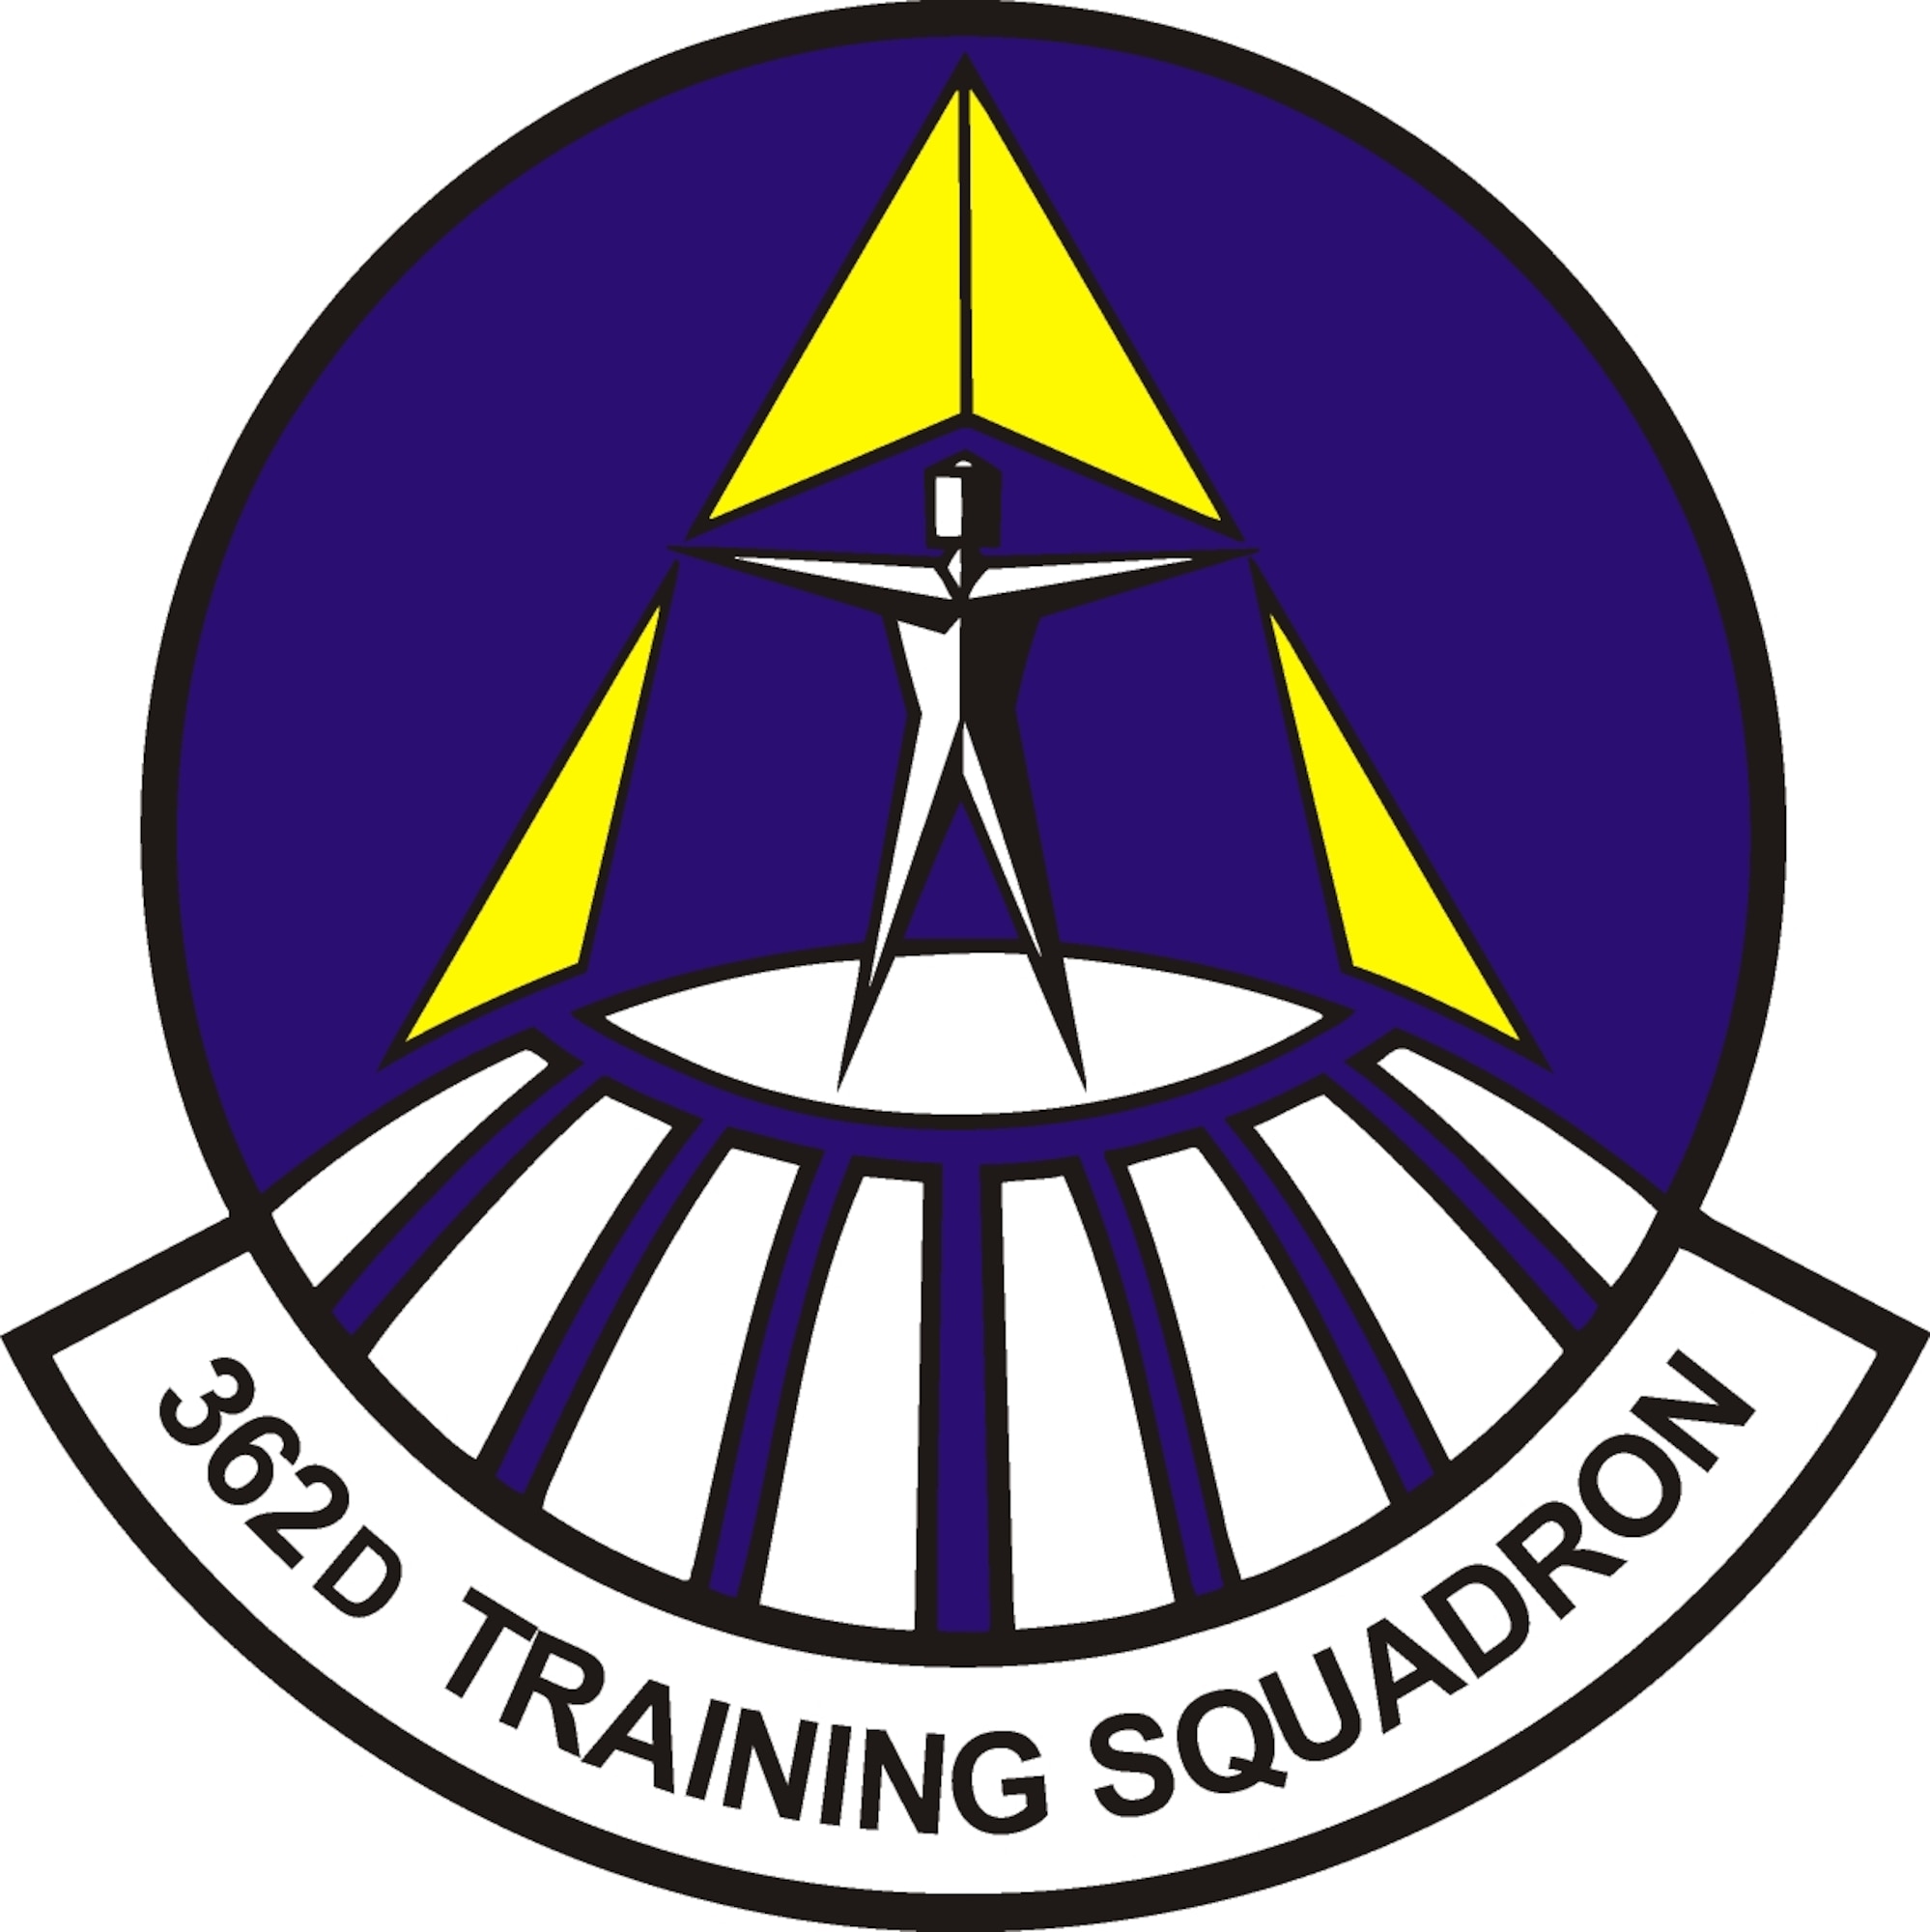 362ndTraining Squadron